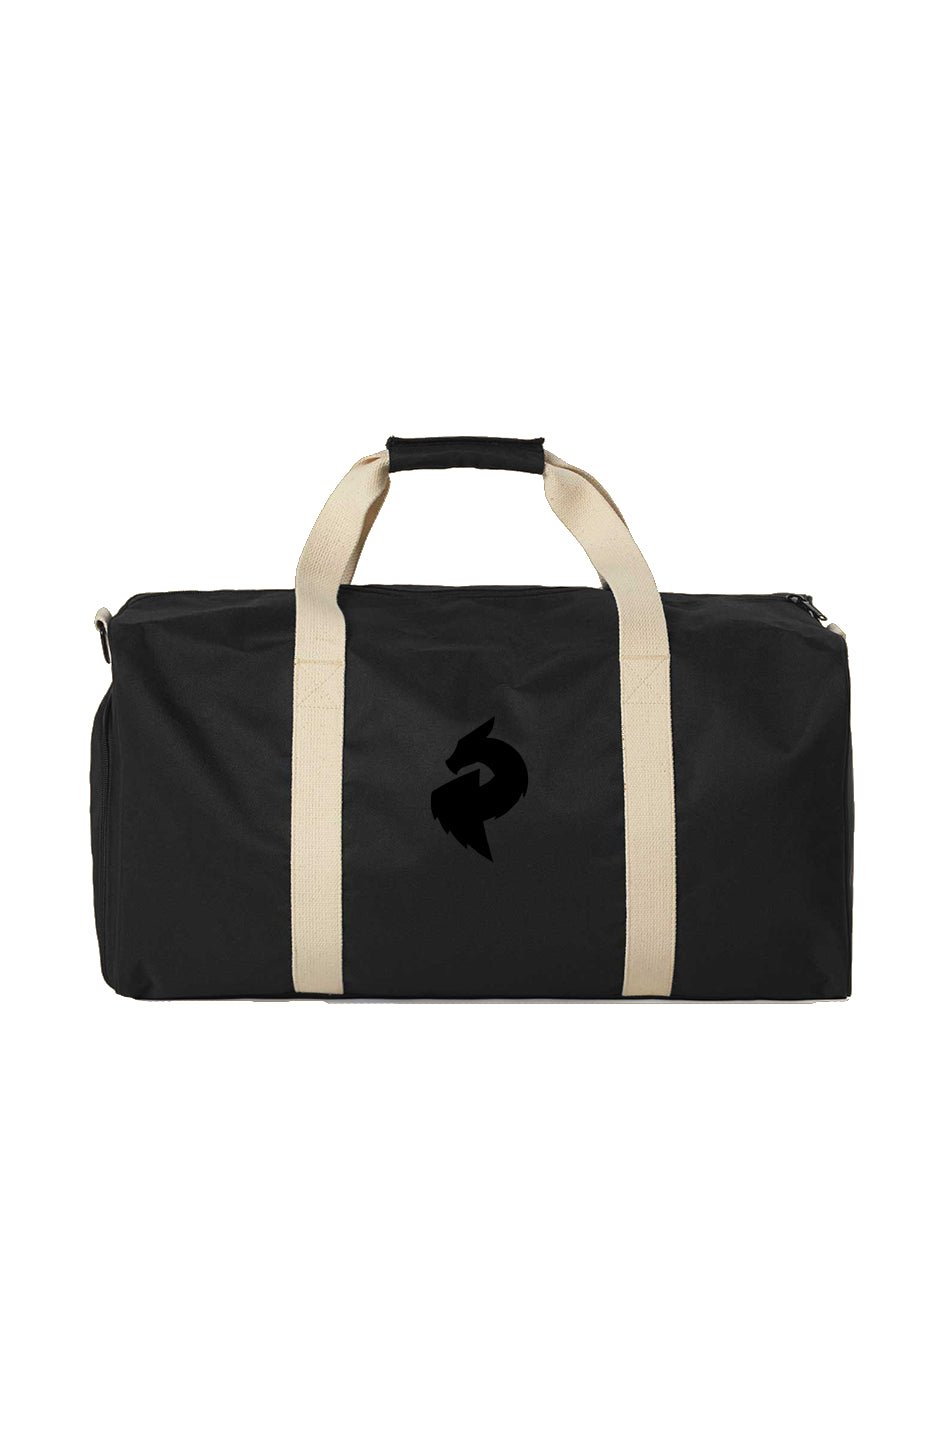 Black/Ecru Travel Bag by Dragon Foxx™ - Travel Bags - Apliiq - Black/Ecru Travel Bag by Dragon Foxx™ - APQ-4570915S34A1 - One Size - BLACK/ECRU - 11” x 11” x 22-3/4” Travel Bag - Accessories - Bags